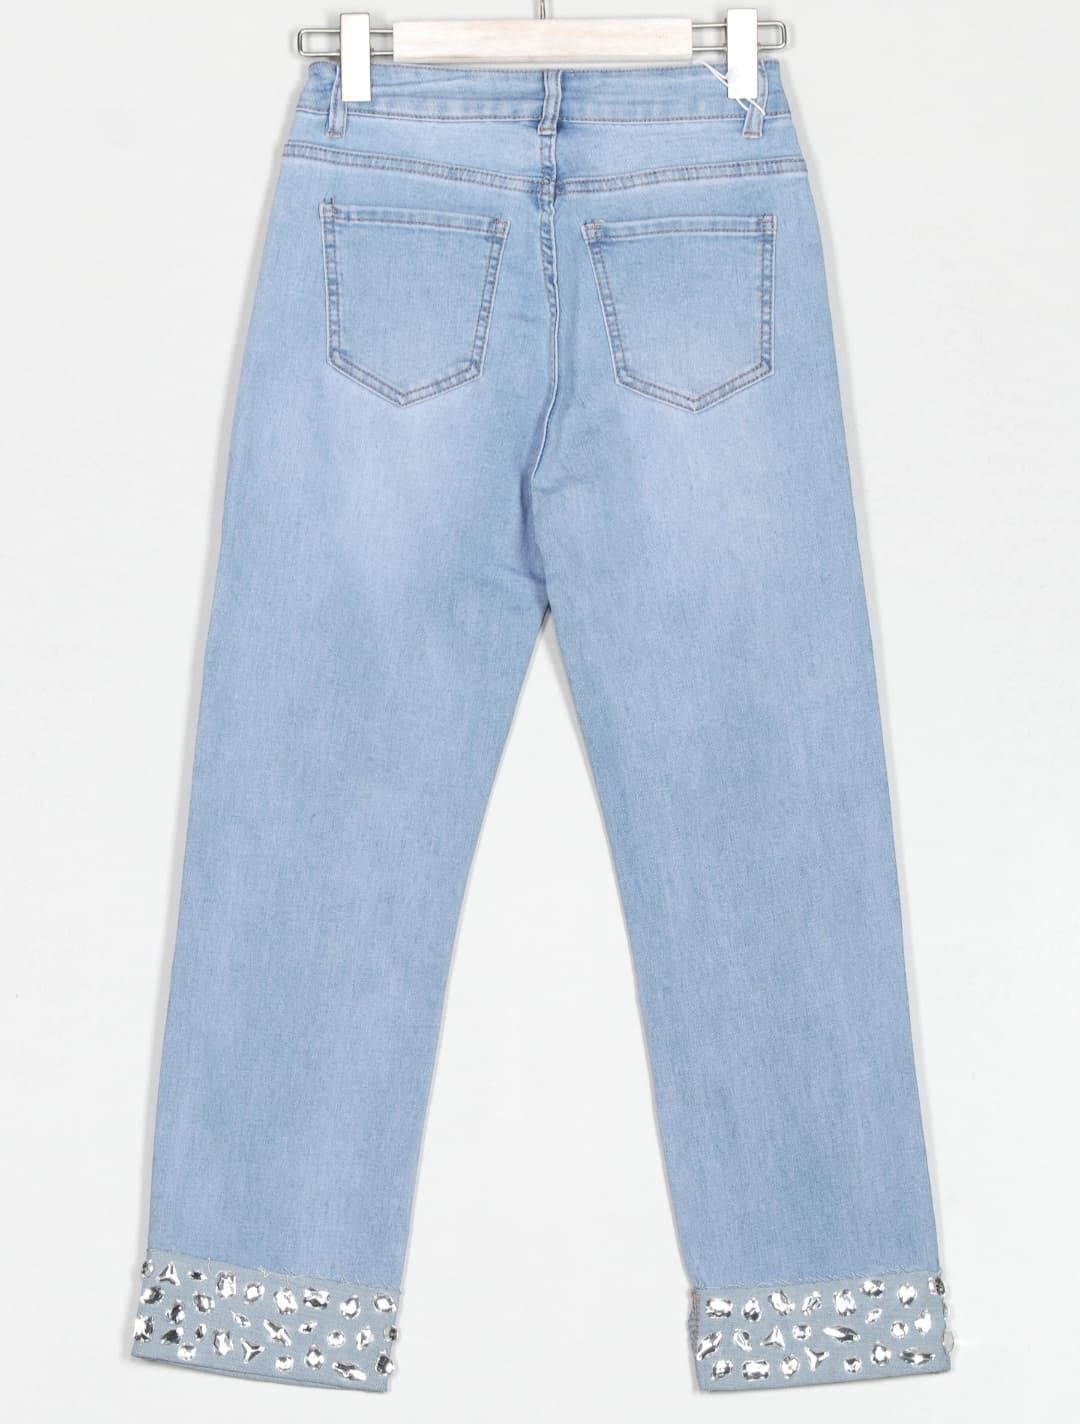 Jeans zafiro - Imagen 5